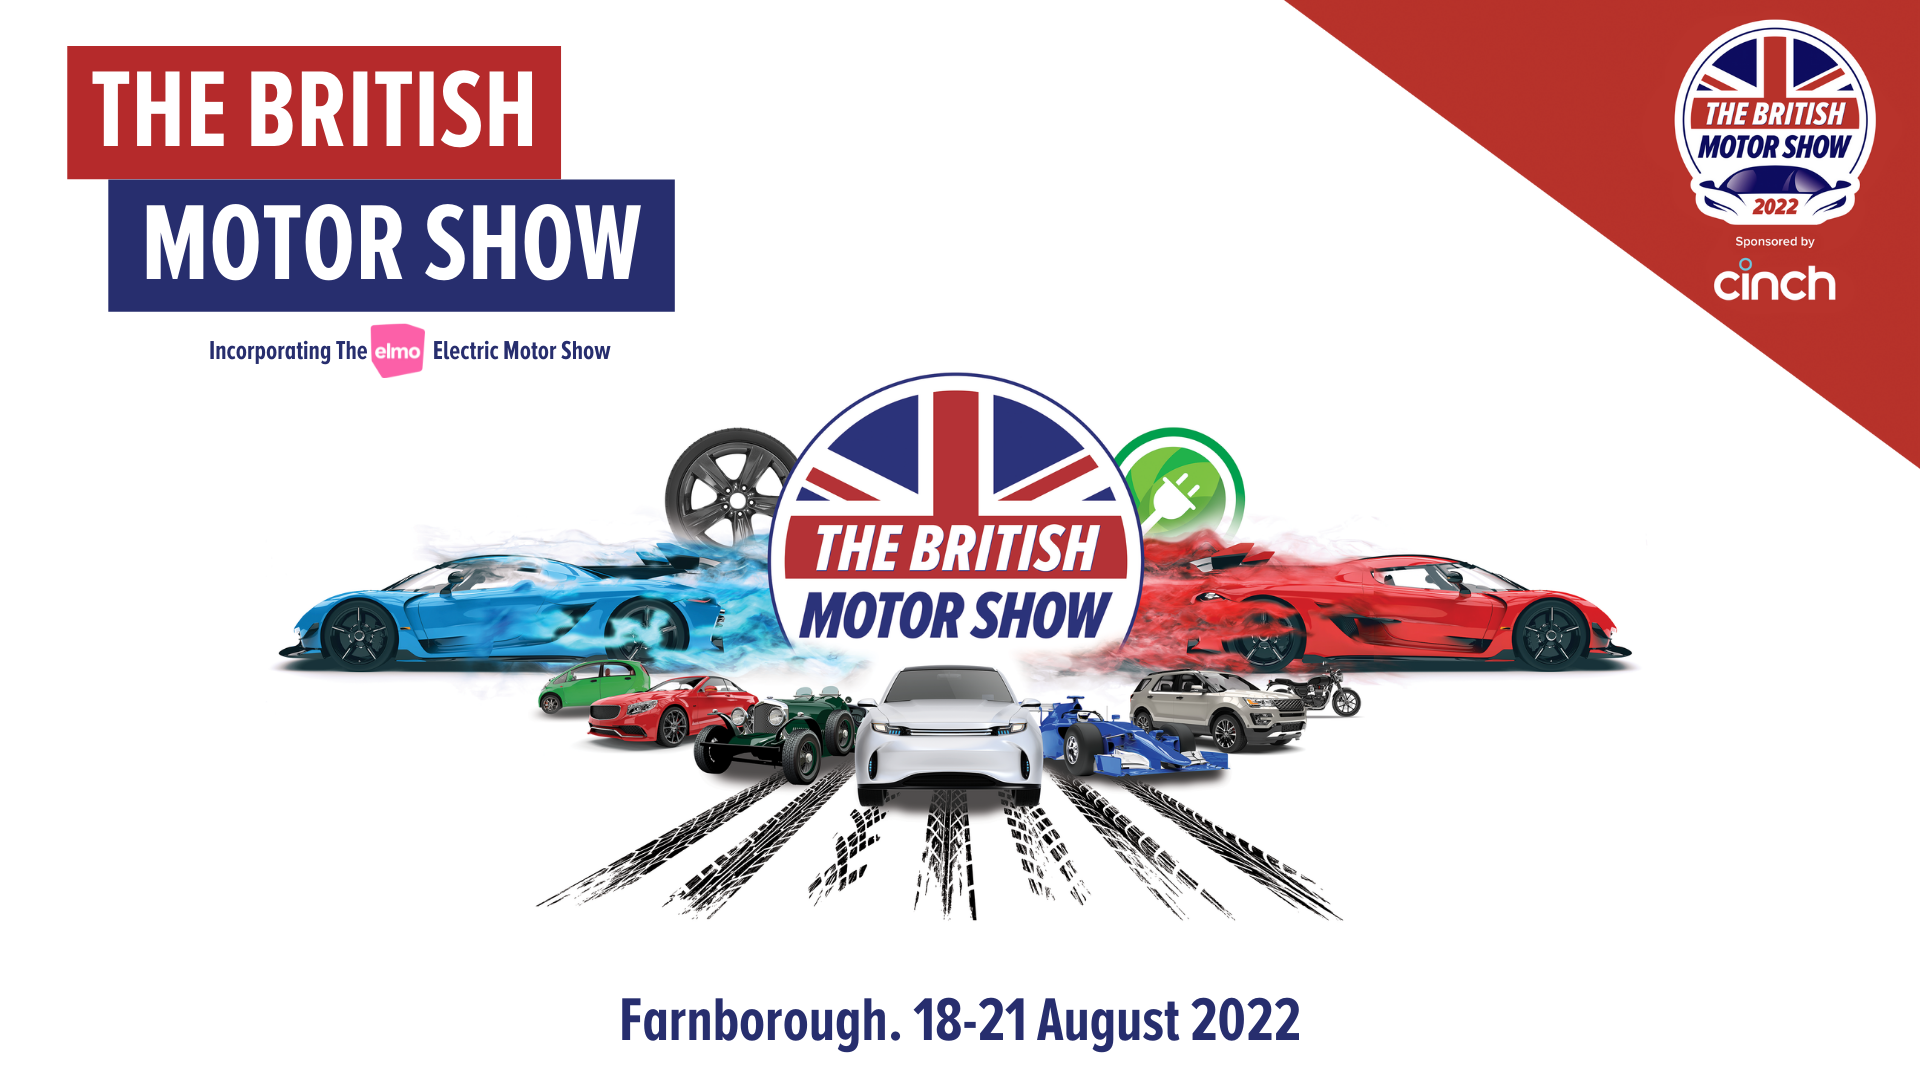 The British Motor Show 